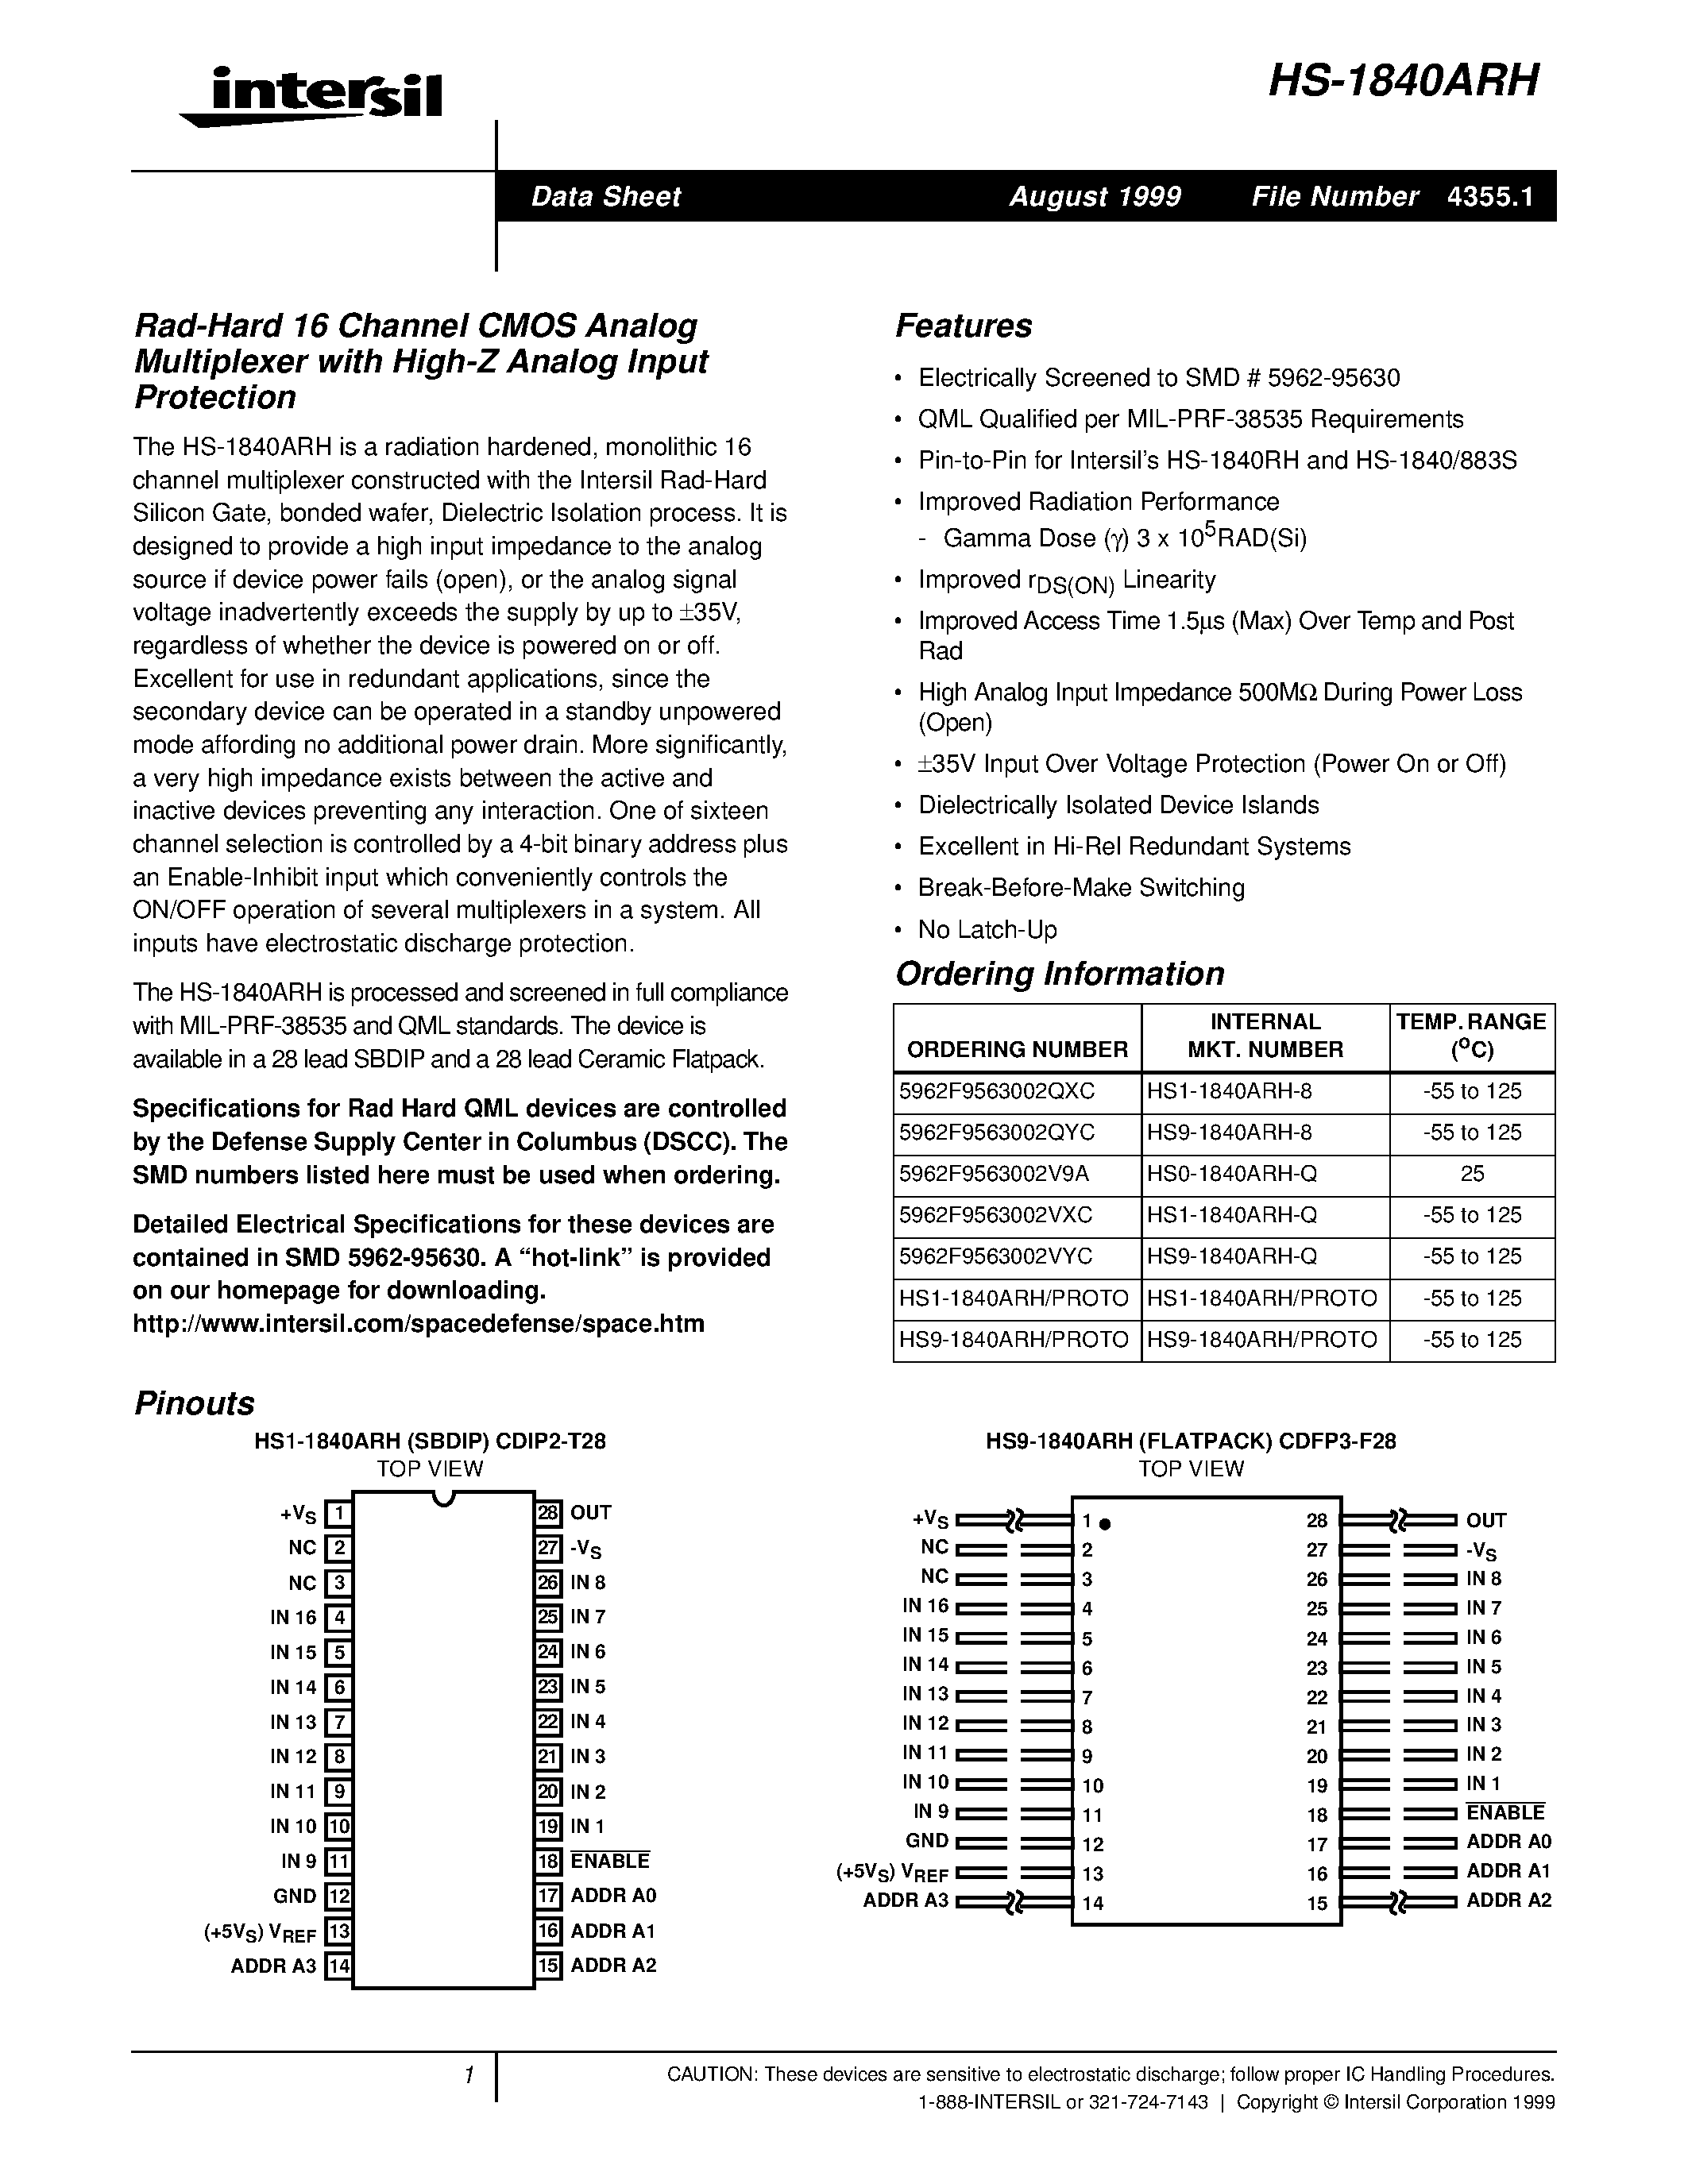 Даташит HS-1840ARH - Rad-Hard 16 Channel CMOS Analog Multiplexer with High-Z Analog Input Protection страница 1